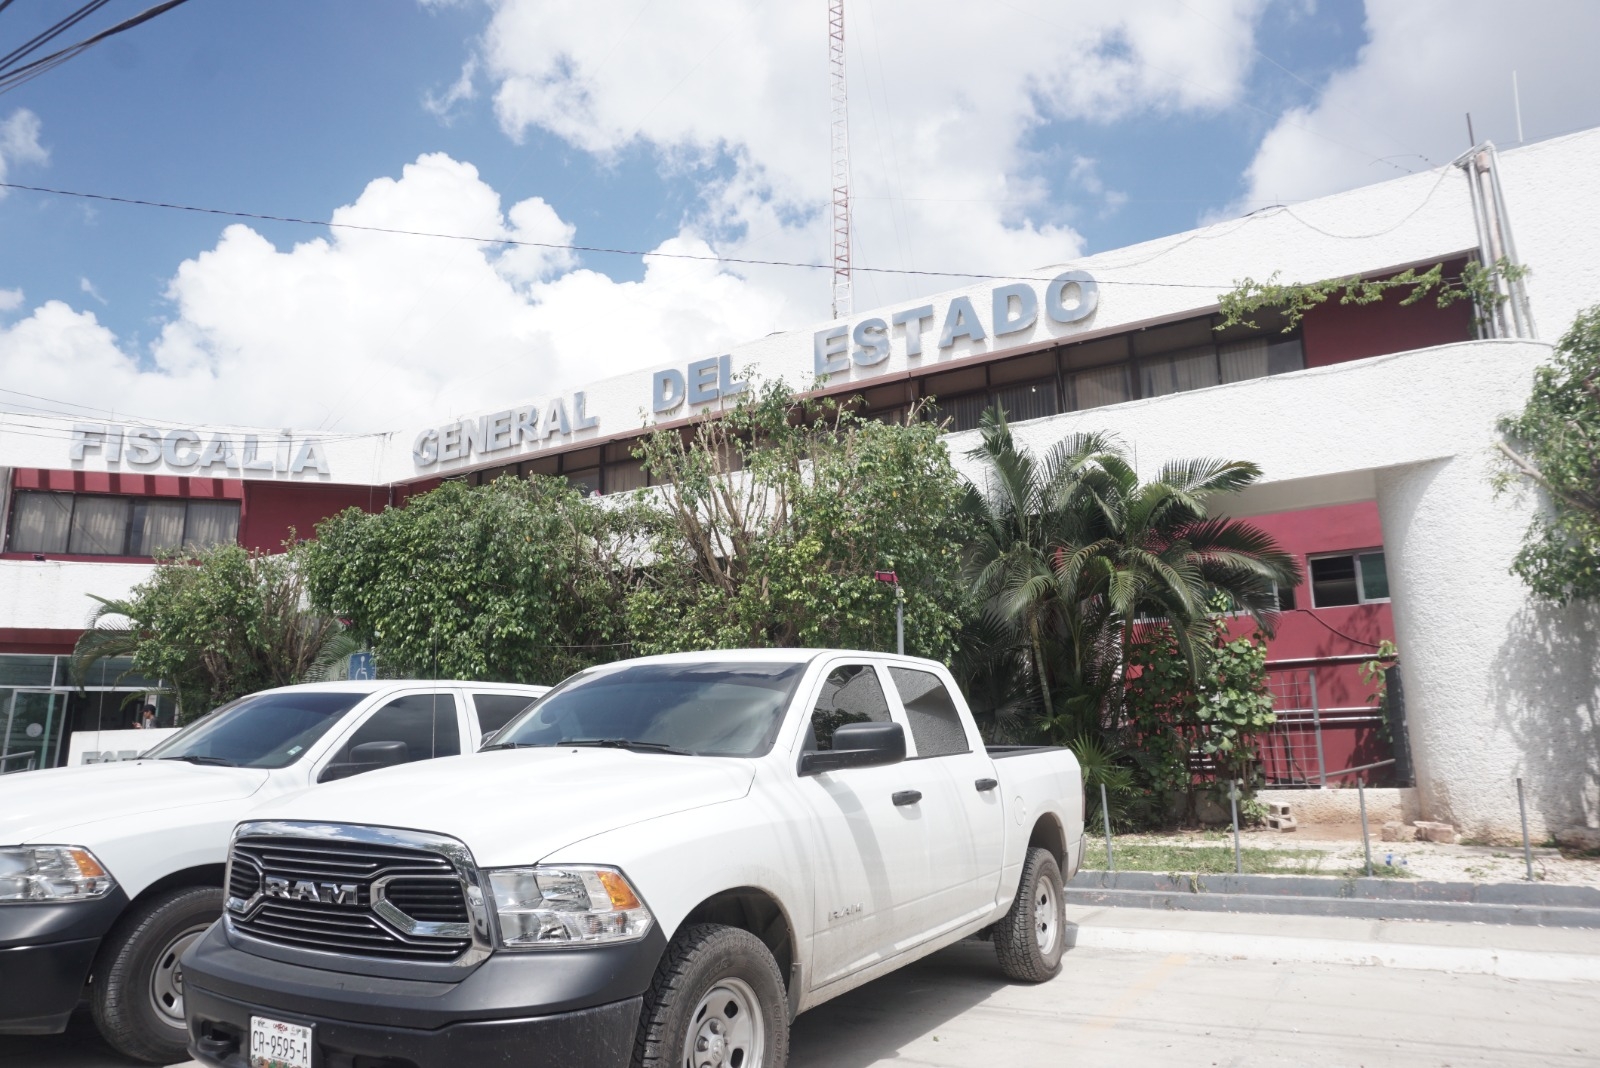 Encarcelan a un hombre por robar tubería de cobre en una casa de Campeche